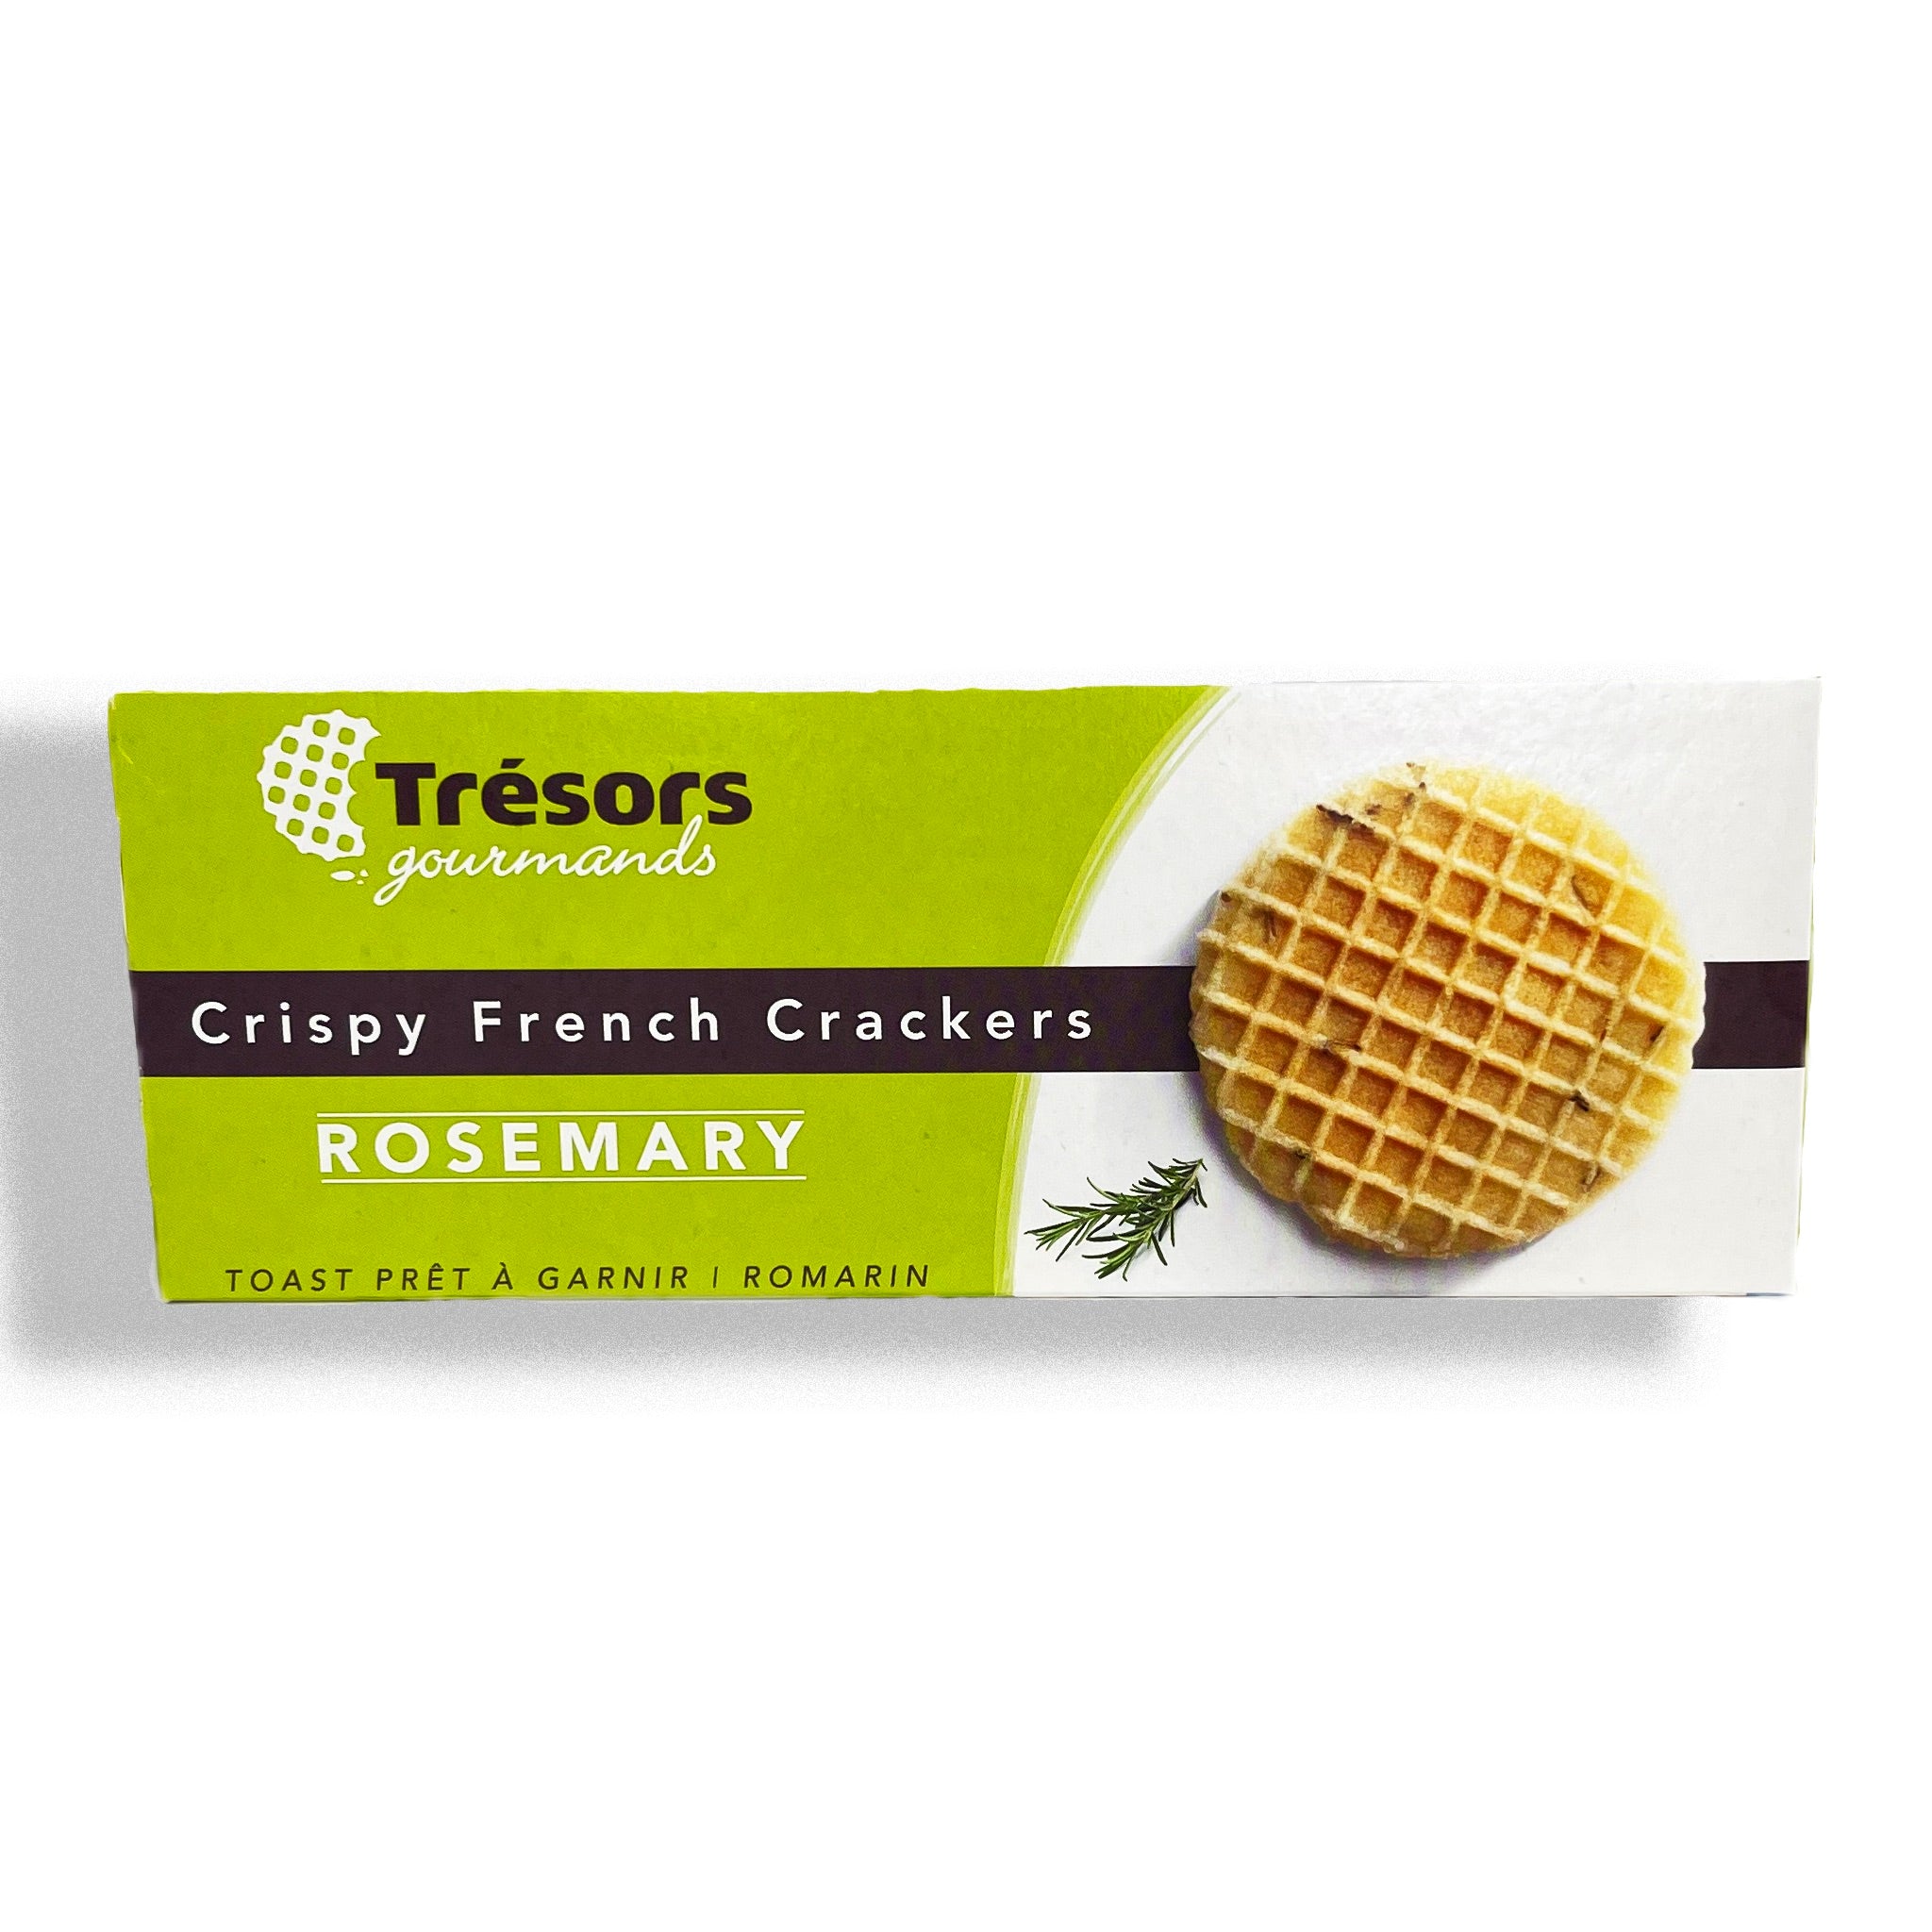 Crispy French Crackers - Rosemary (3.3oz)